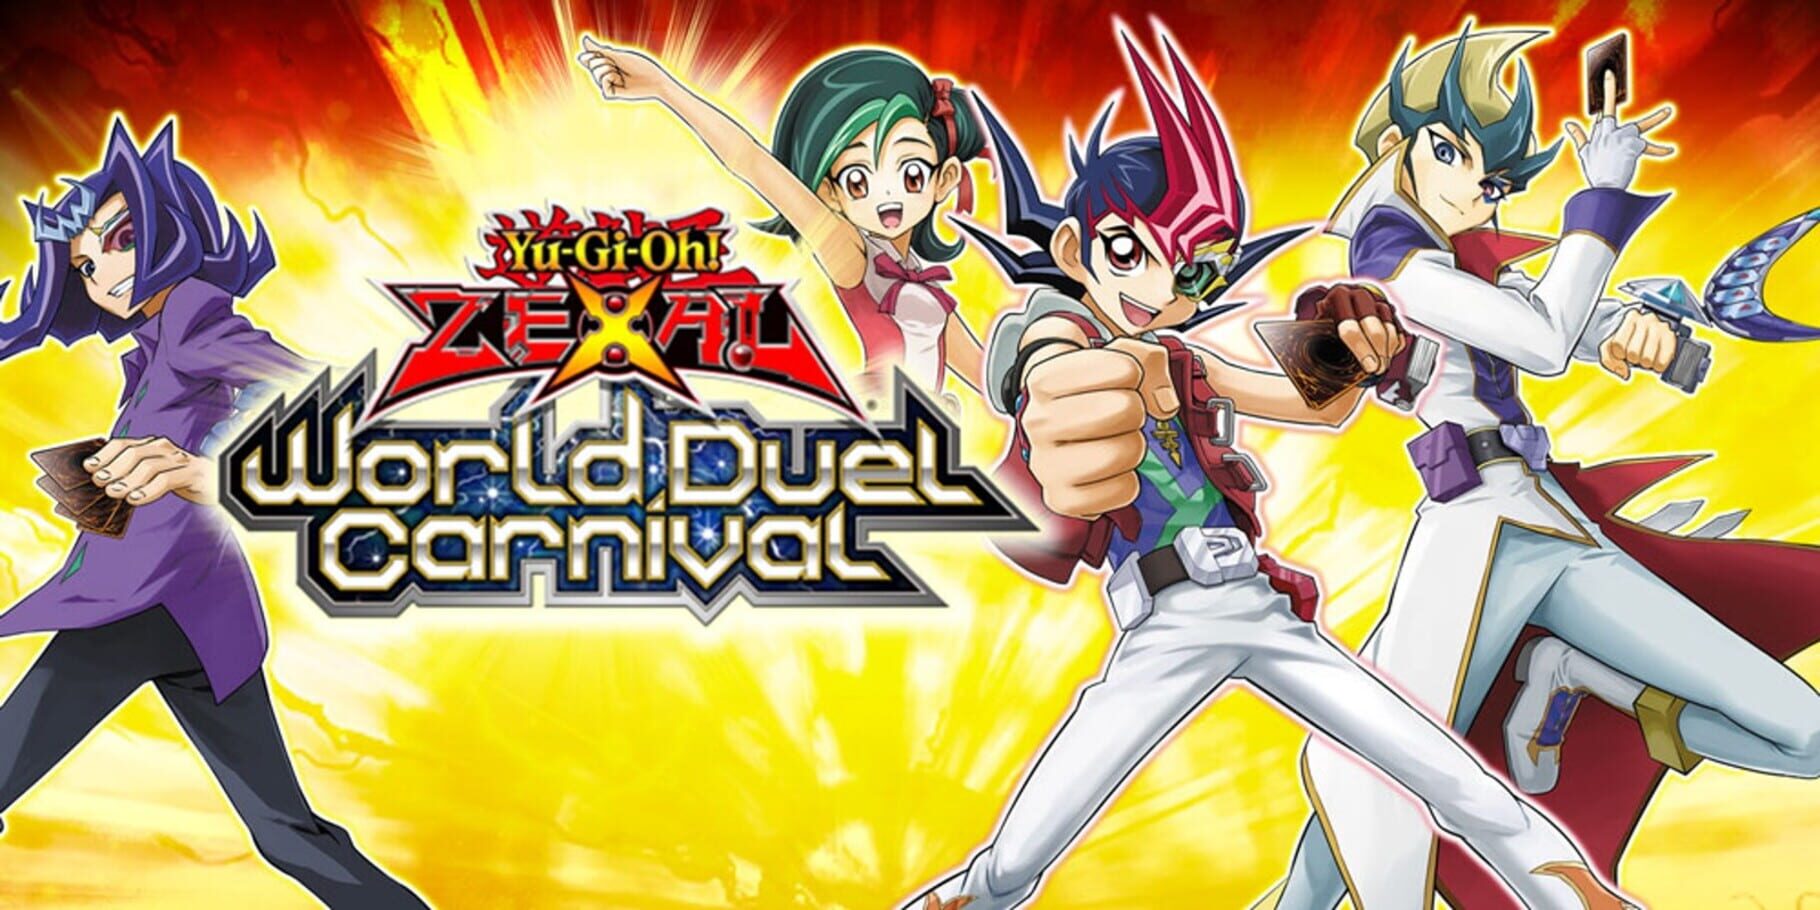 Arte - Yu-Gi-Oh! Zexal World Duel Carnival